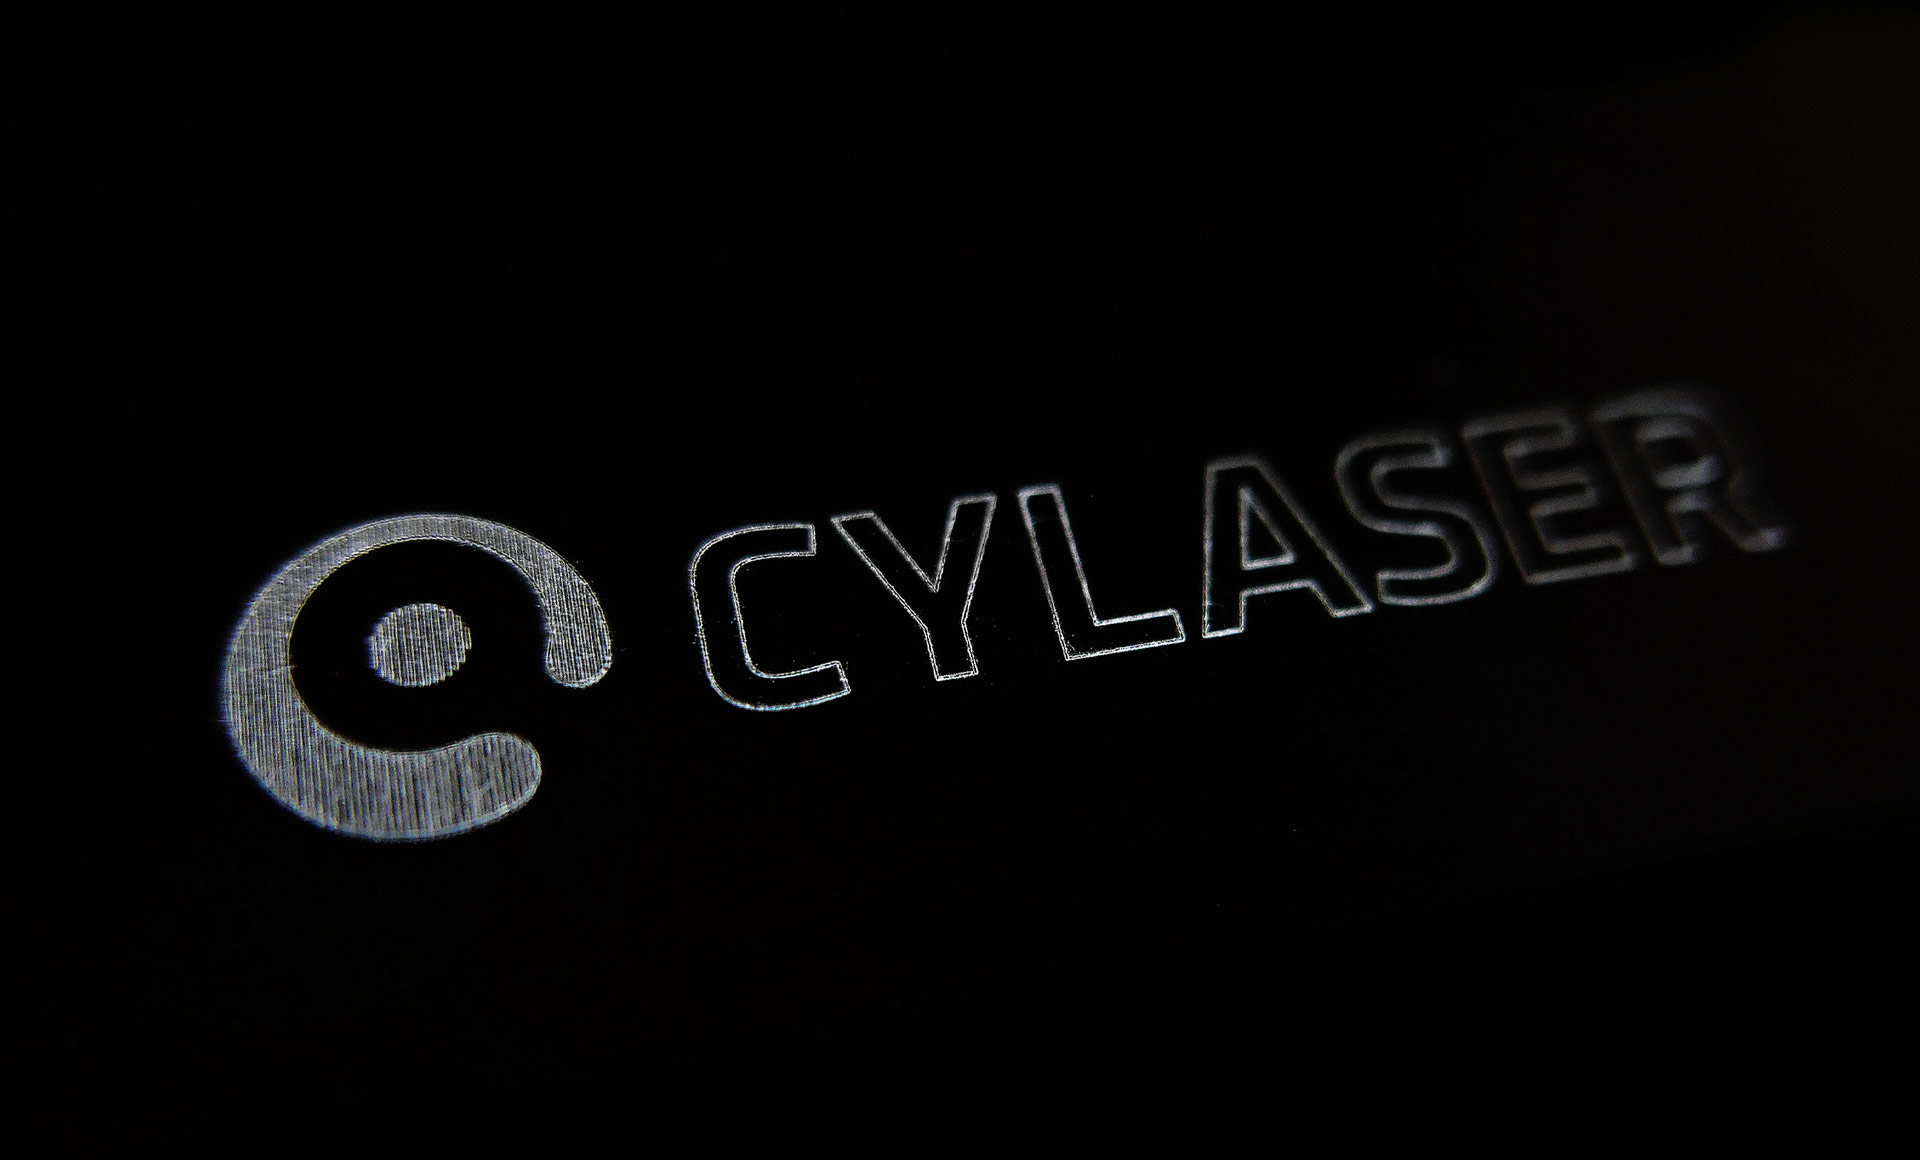 Cy-laser CY-FAST MARK marking